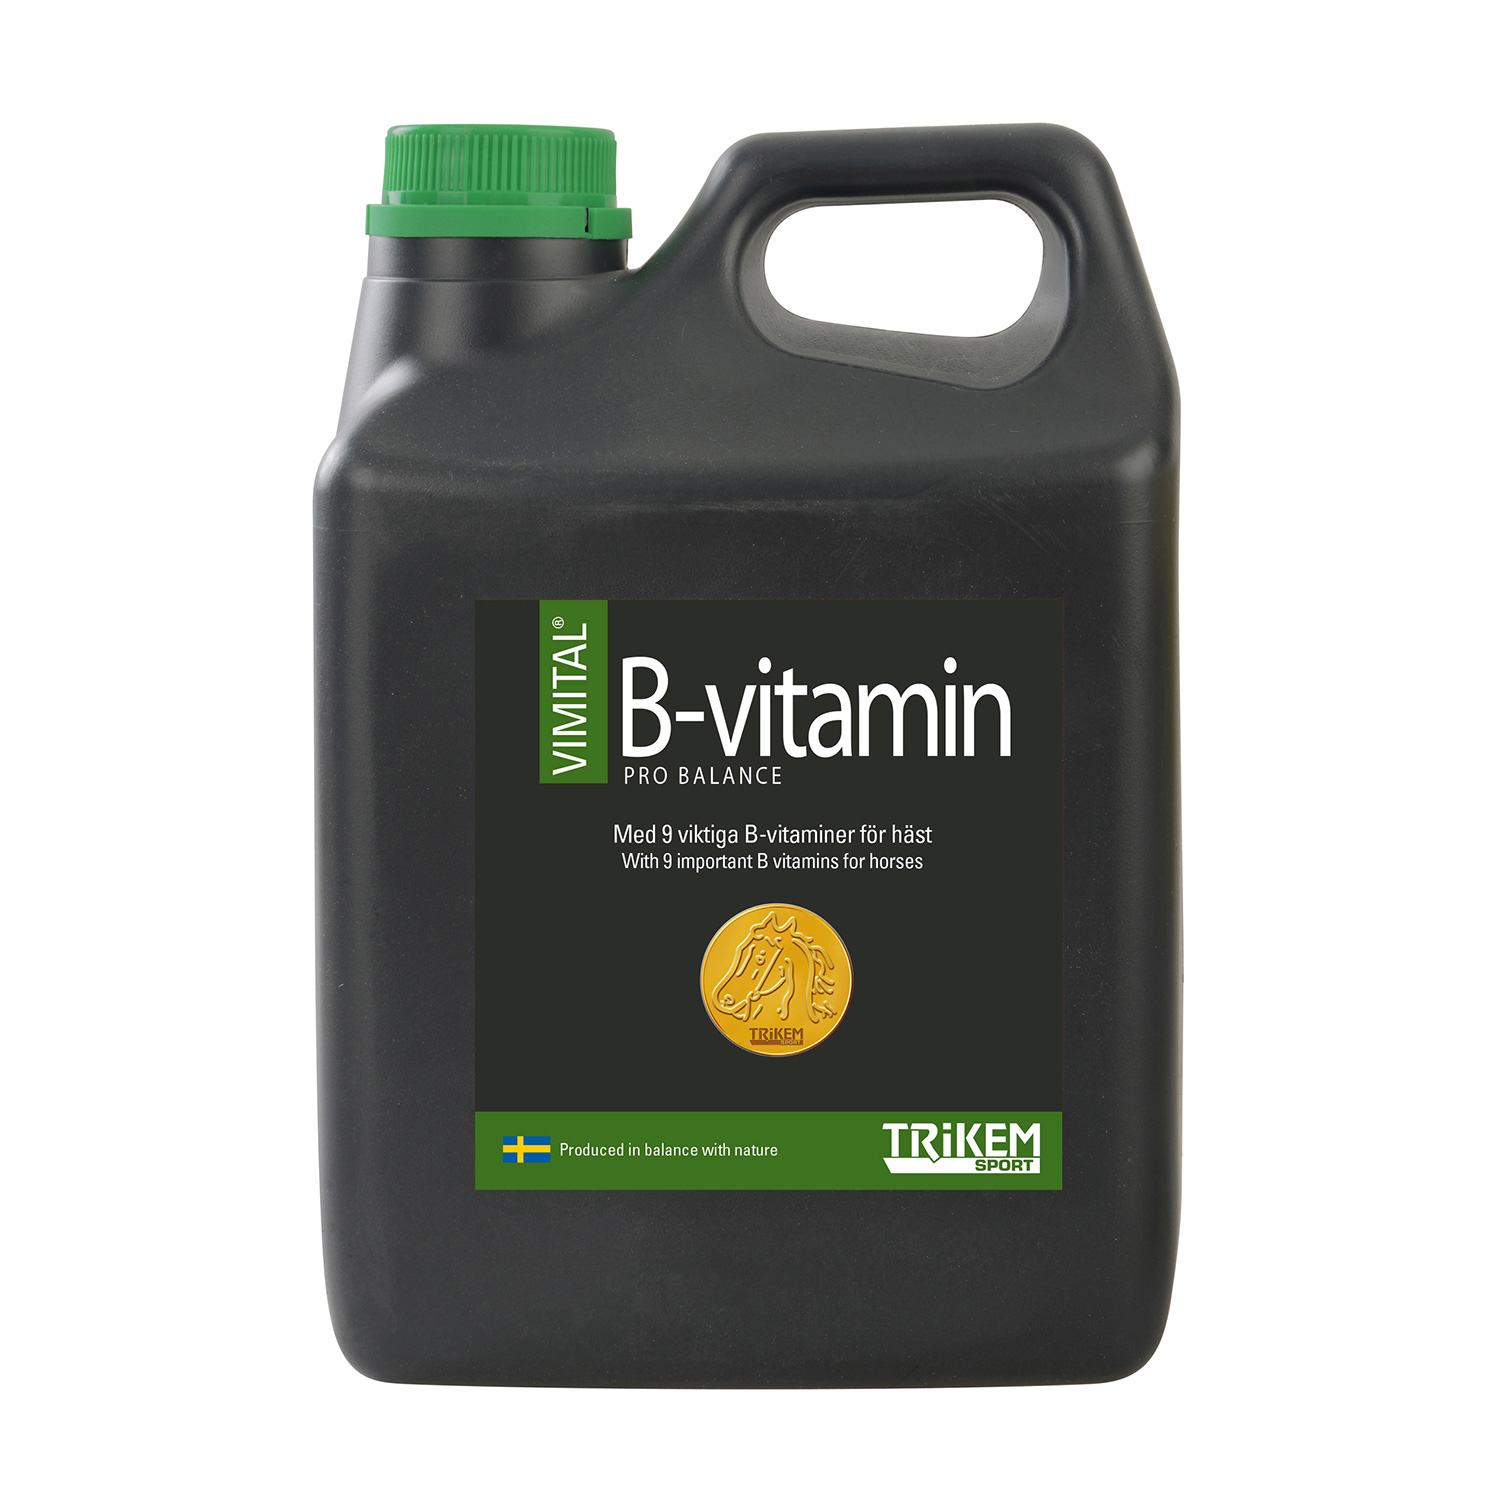 Vimital b-vitamin 5 liter